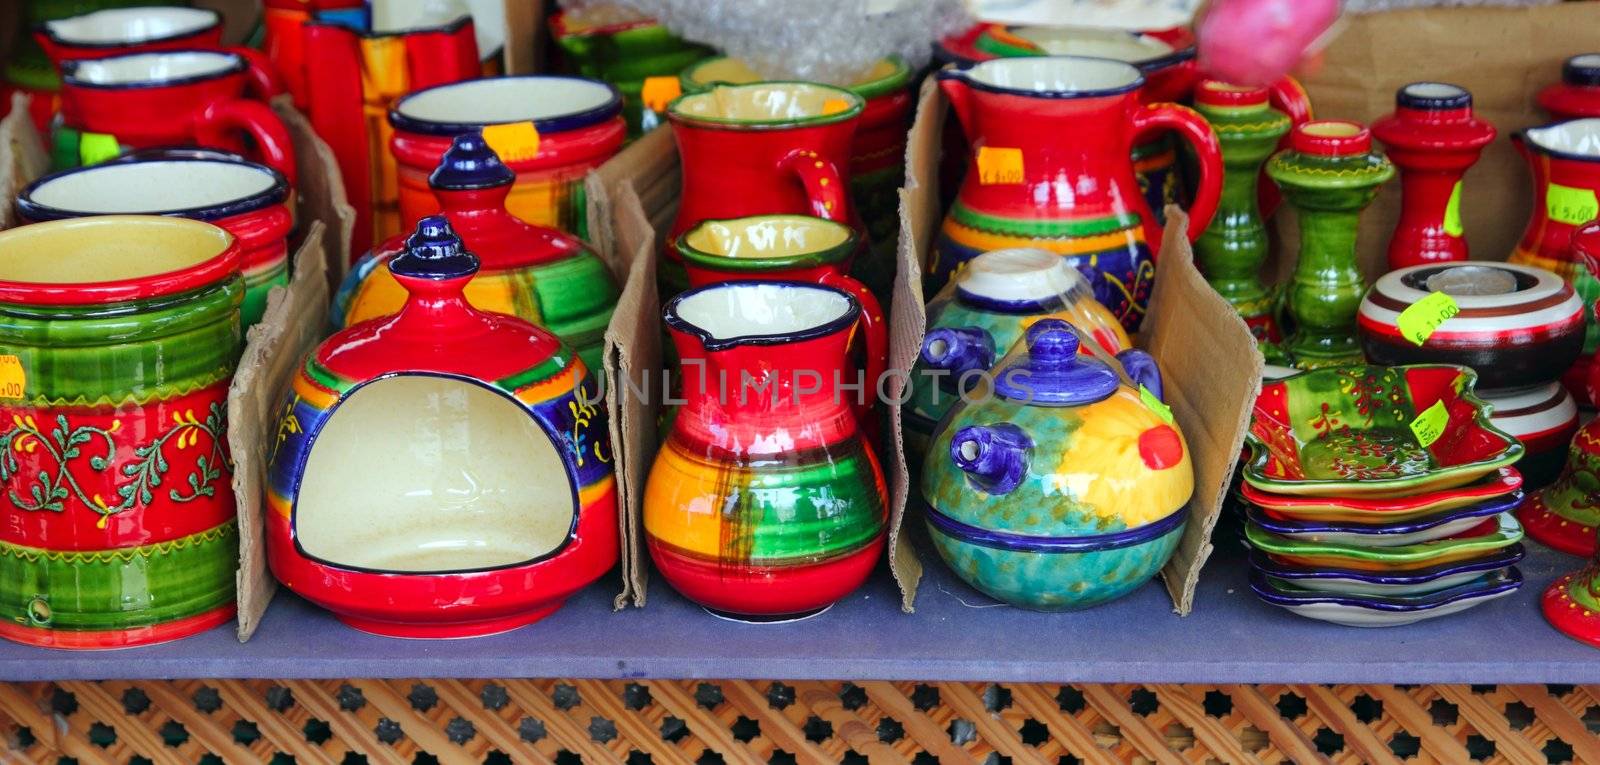 colorful mediterranean pottery ceramics painted in vivid colors